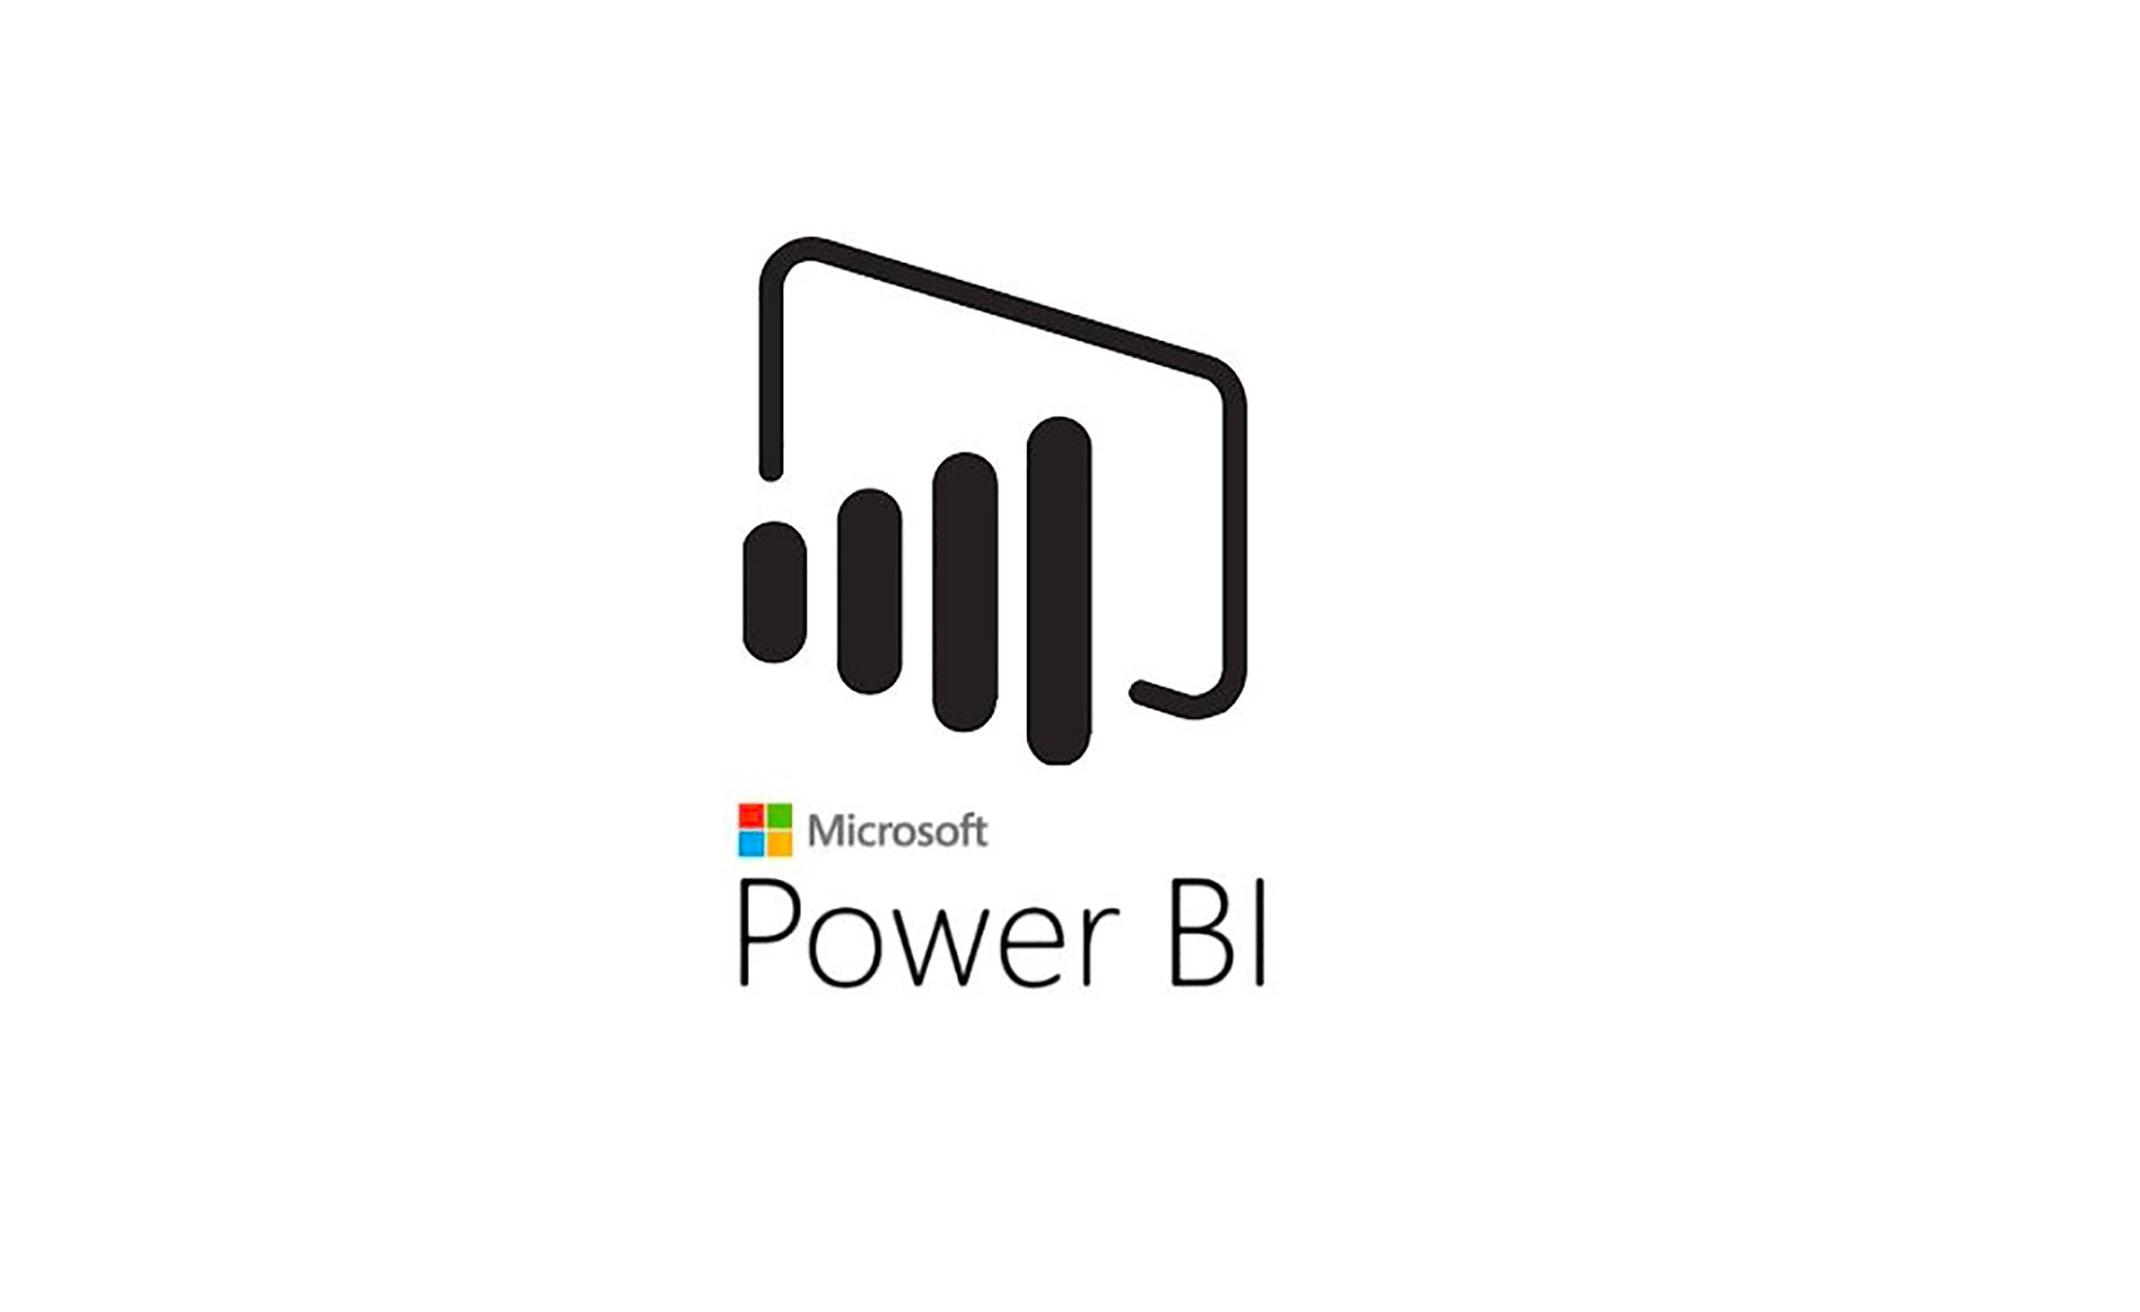 Microsoft Power BI Training in Redmond, WA | Introduction to Power BI training for beginners | Getting started with Power BI | What is Power BI | January 20, 2020 - February 12, 2020